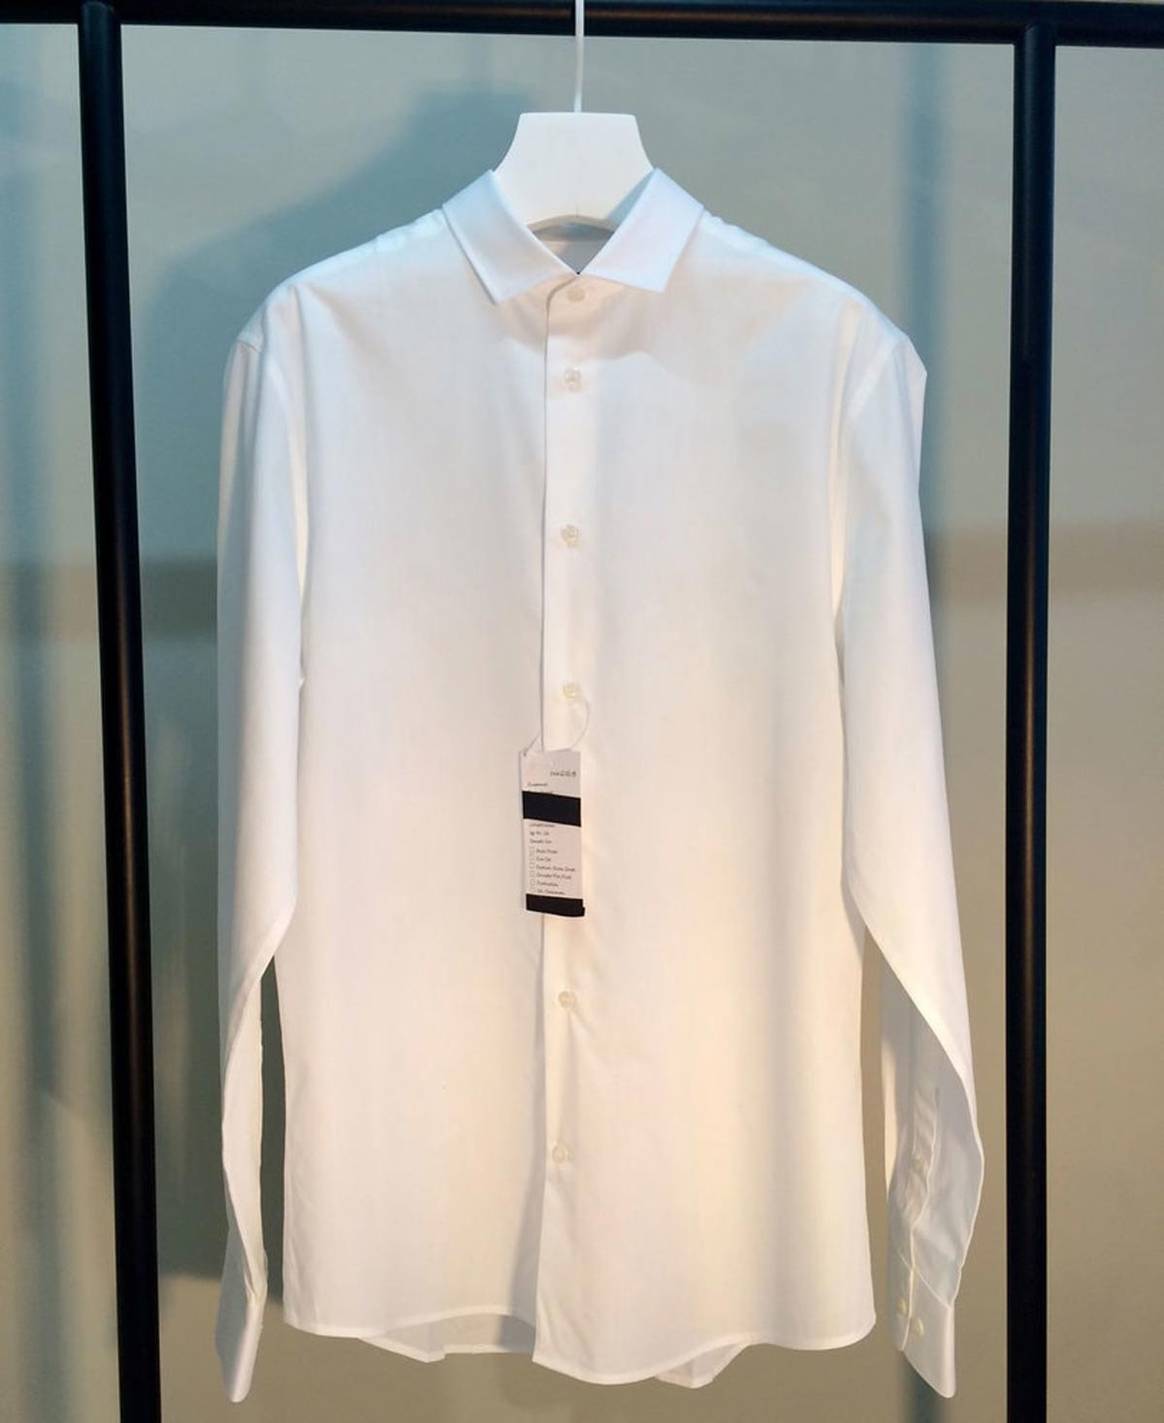 H&M начал шить рубашки на заказ в интернете